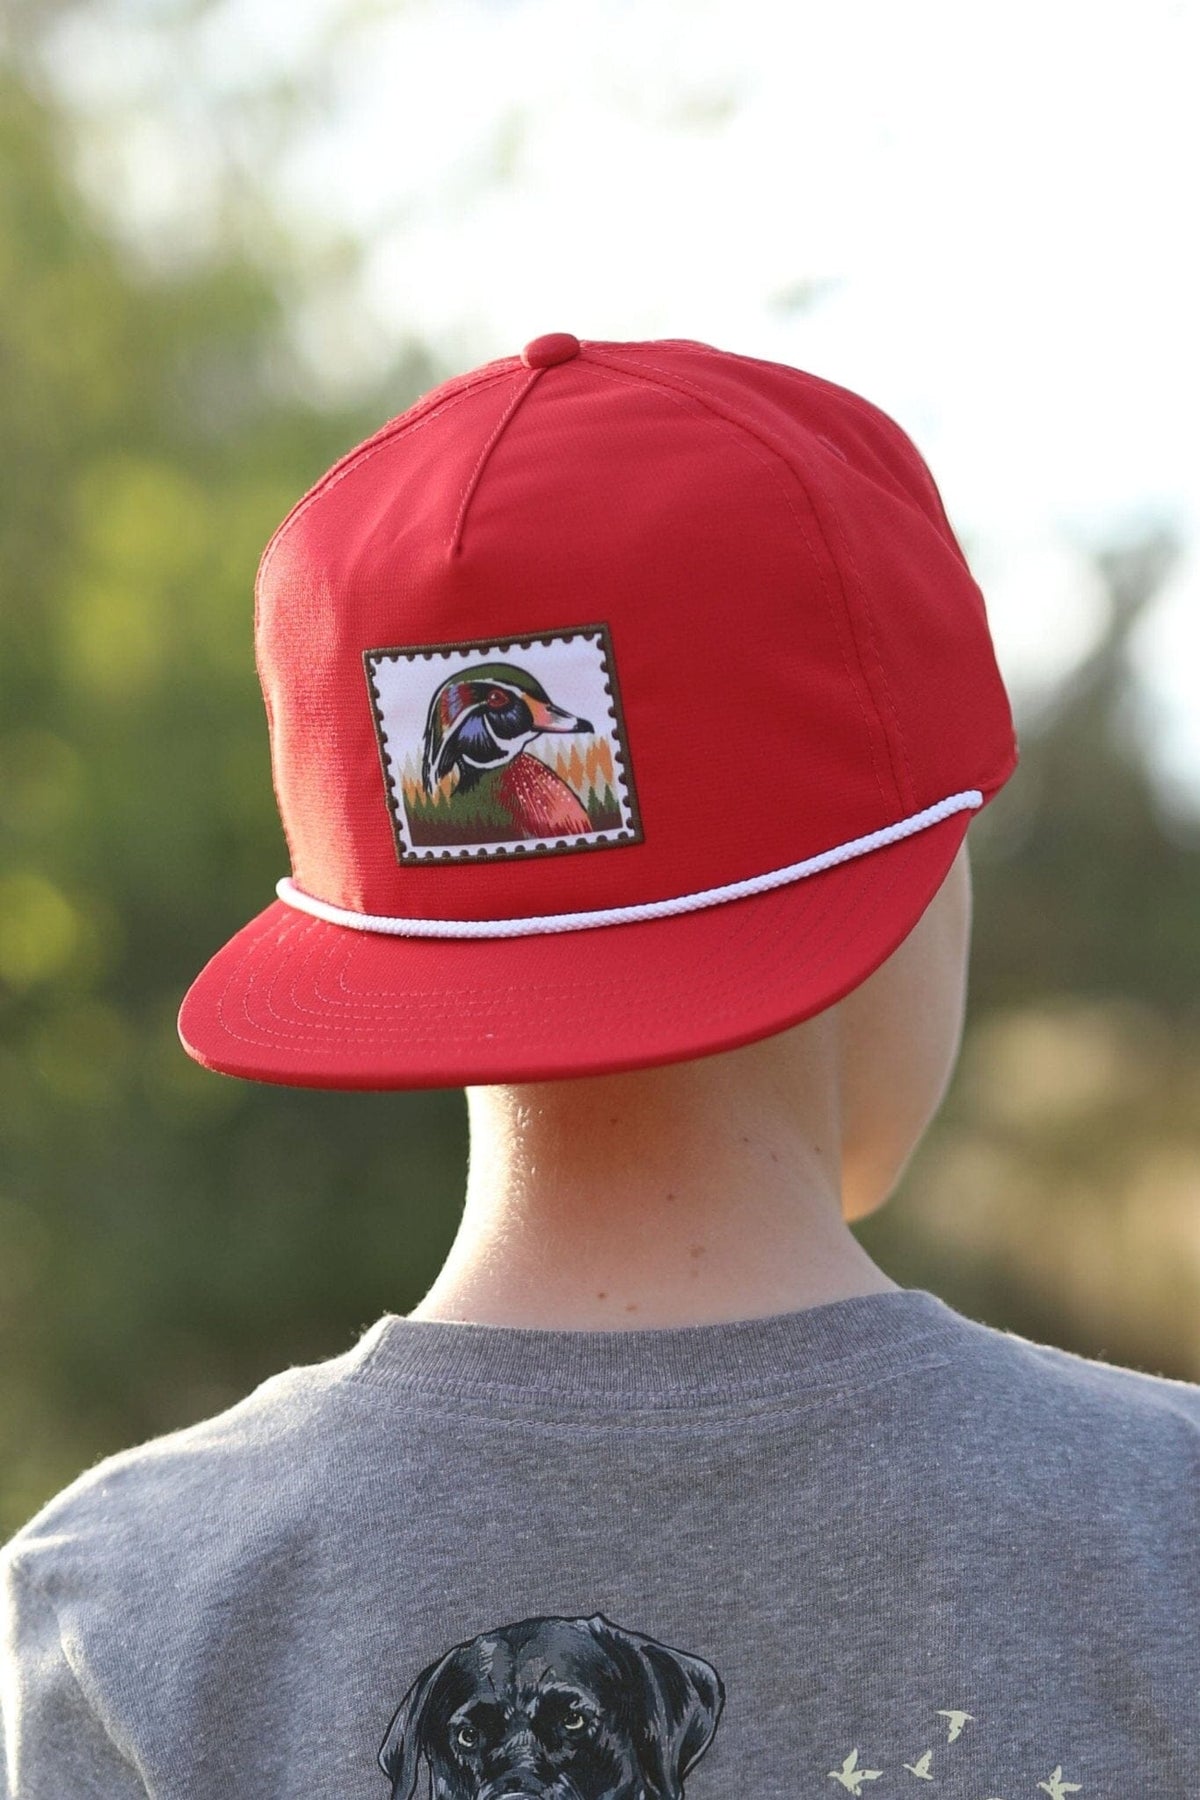 Toddler RedHead Camo Adjustable Hat Cap Hunting Fishing Kids Boys